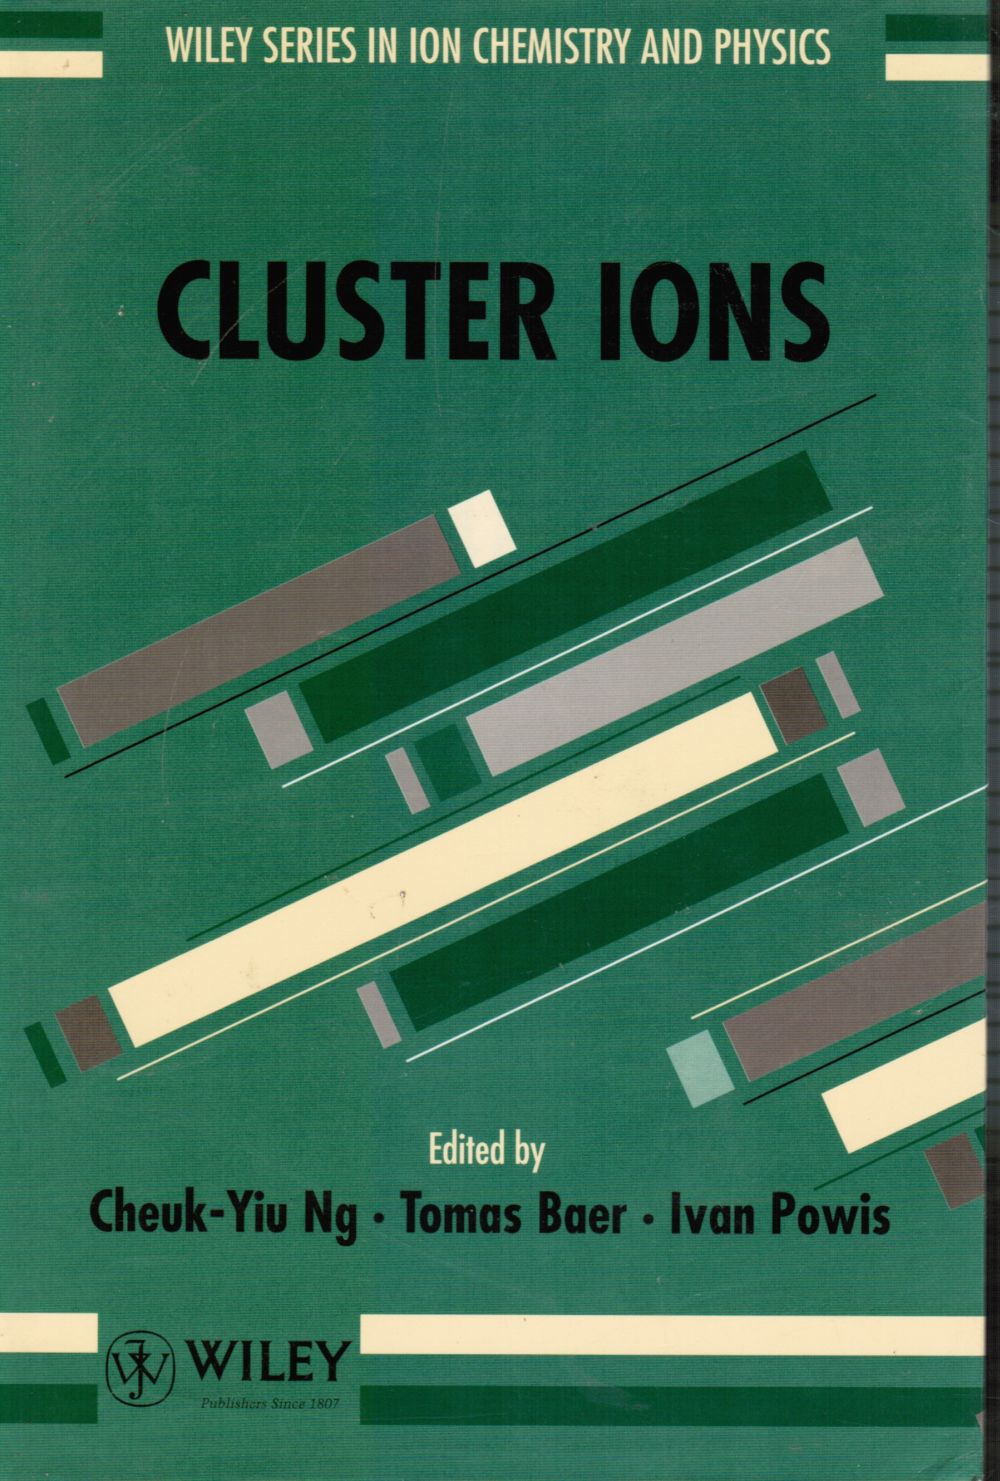 CHEUK-YIU NG; TOMAS BASER, IVAN POWIS - Cluster Ions